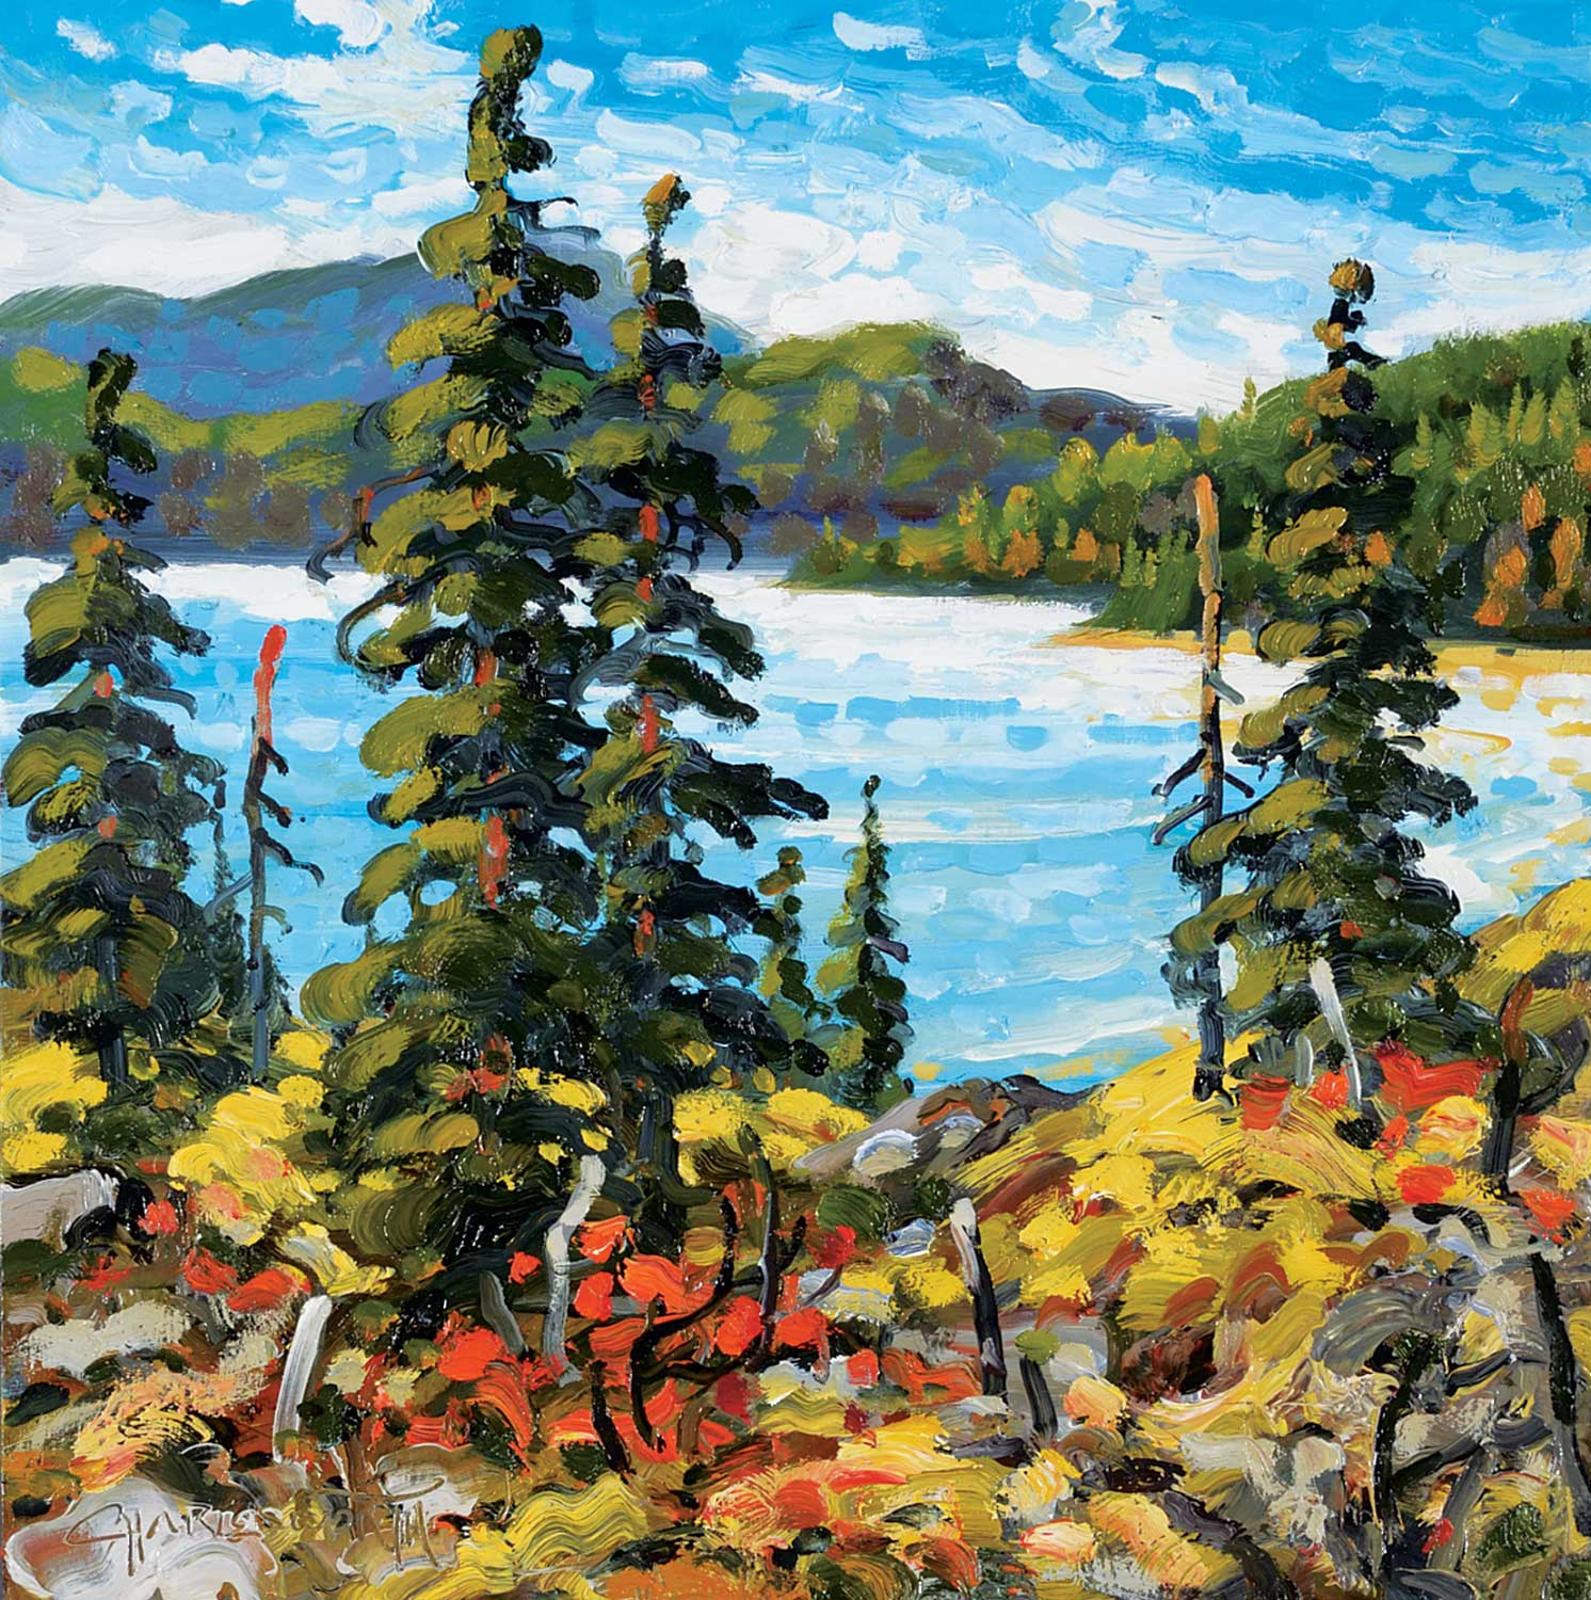 Rod Charlesworth (1955) - Shuswap Lake, September